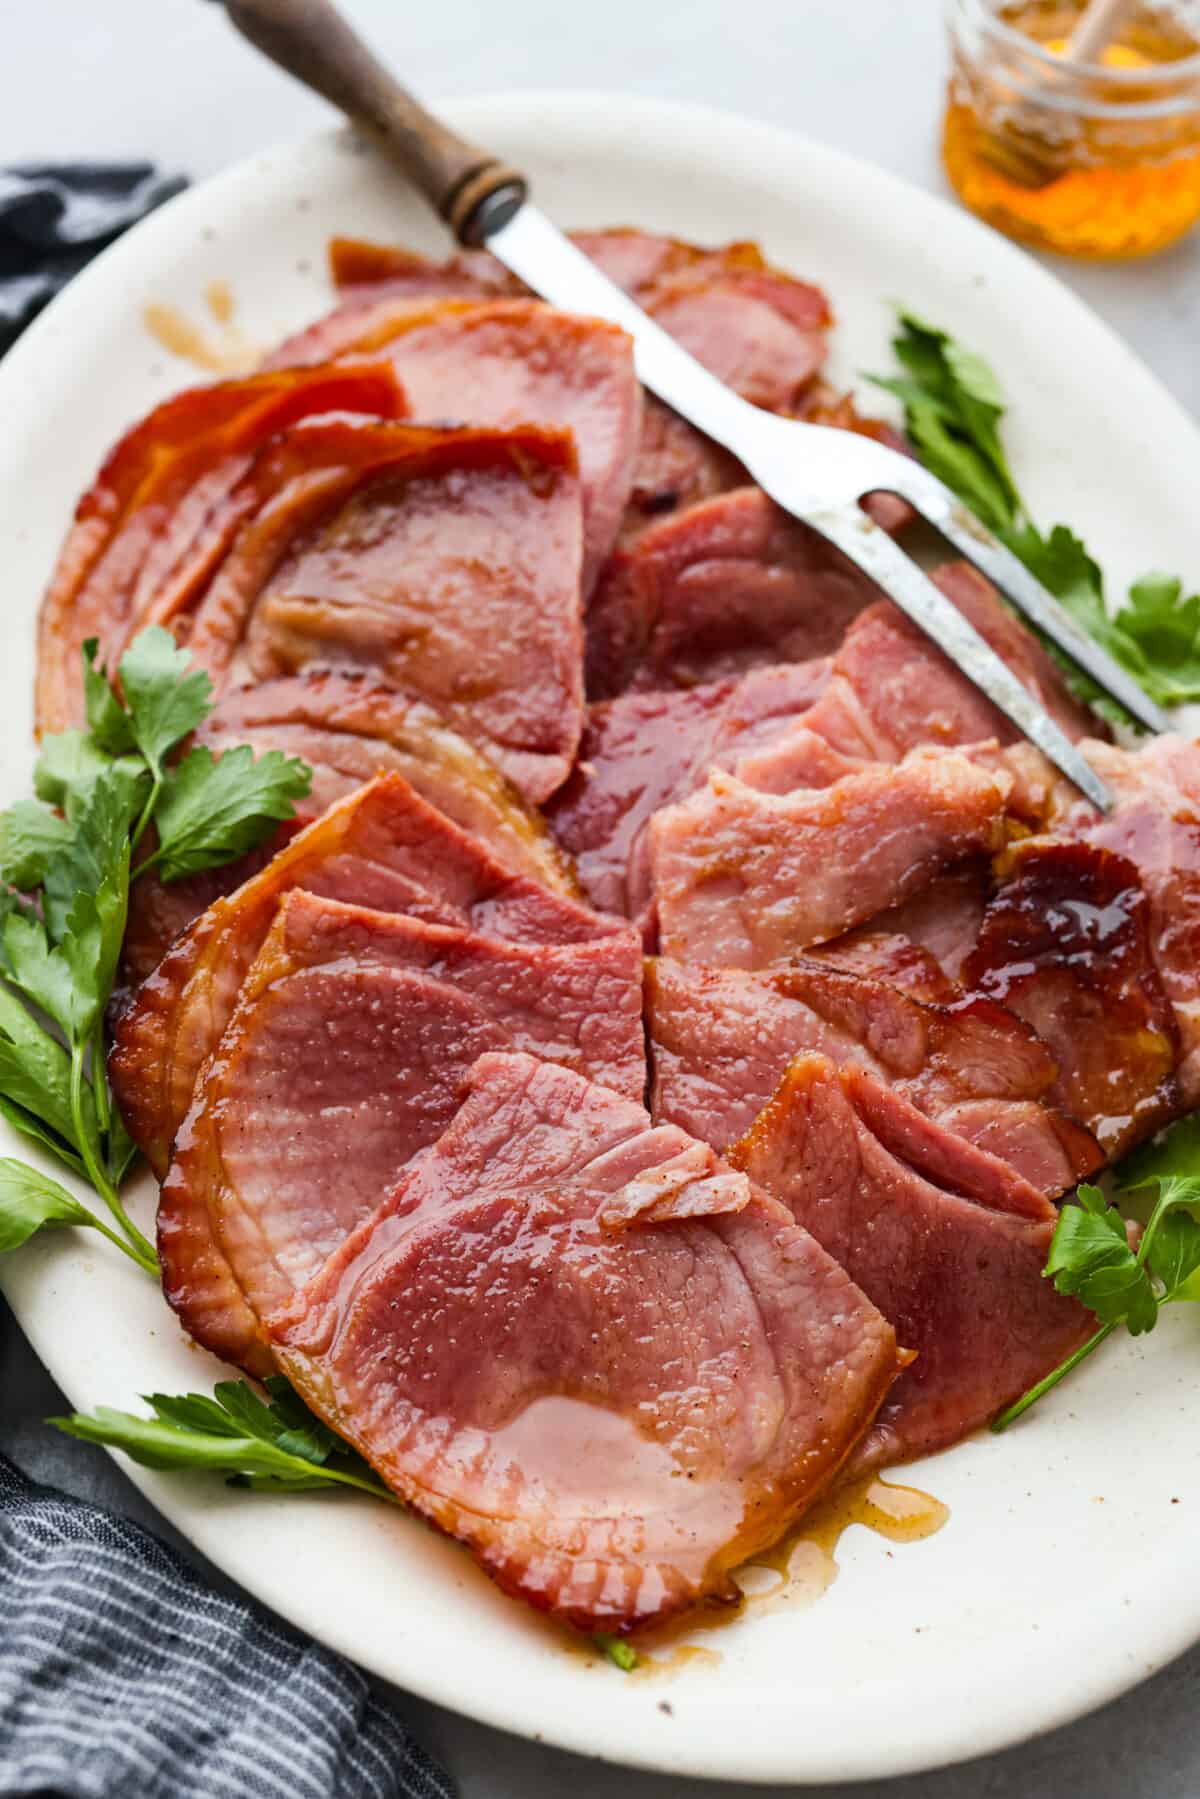 A honey glazed ham, cut into slices.